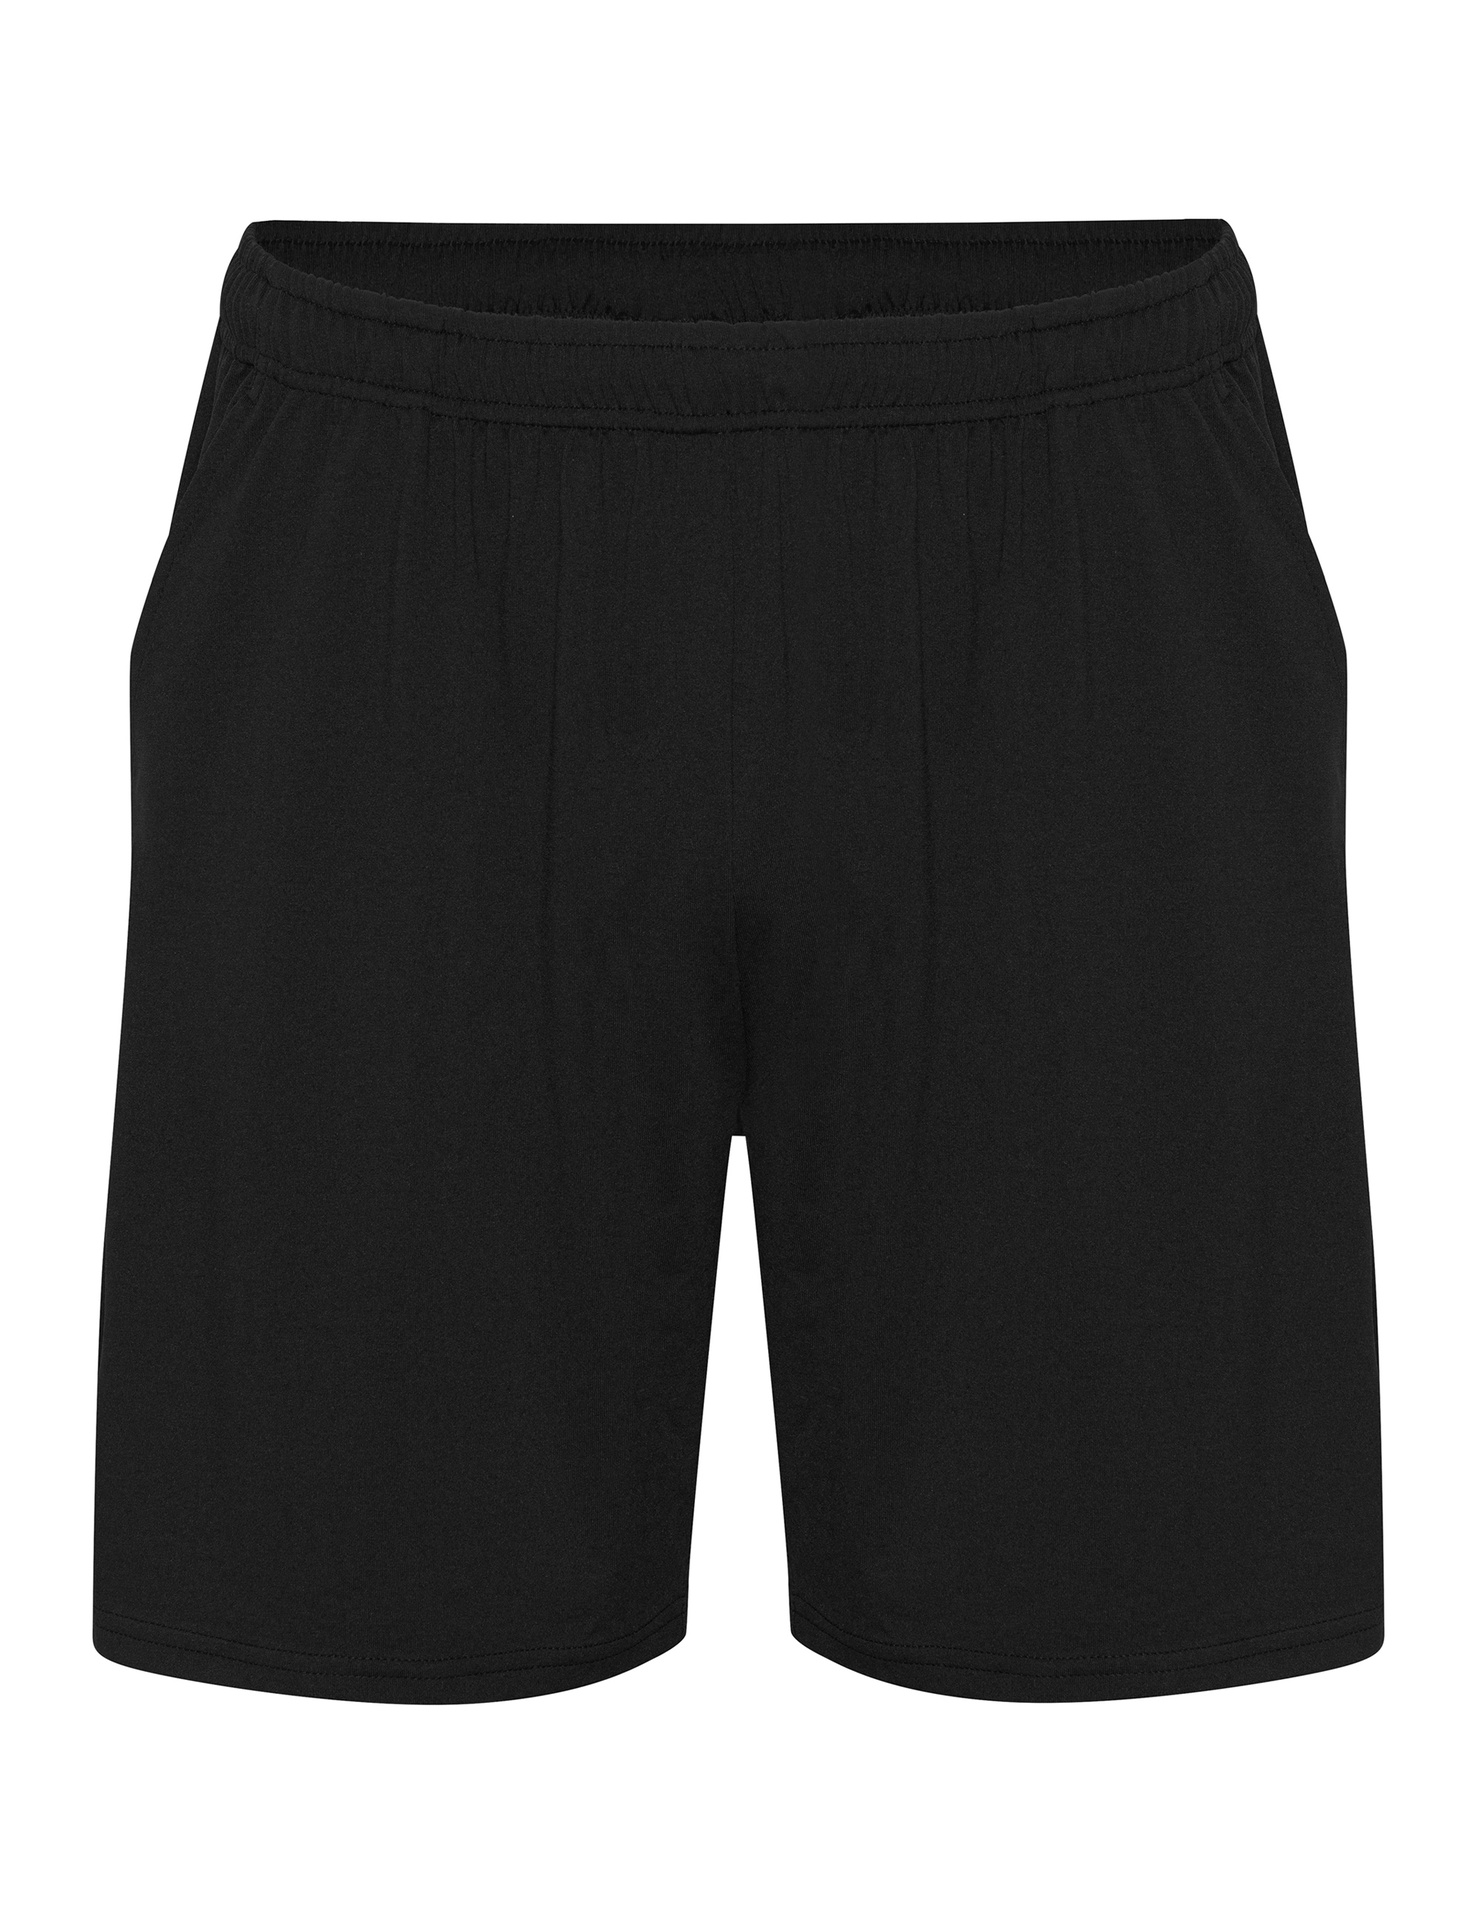 [PR/03861] Unisex Recycled Performance Shorts (Black 03, 2XL)